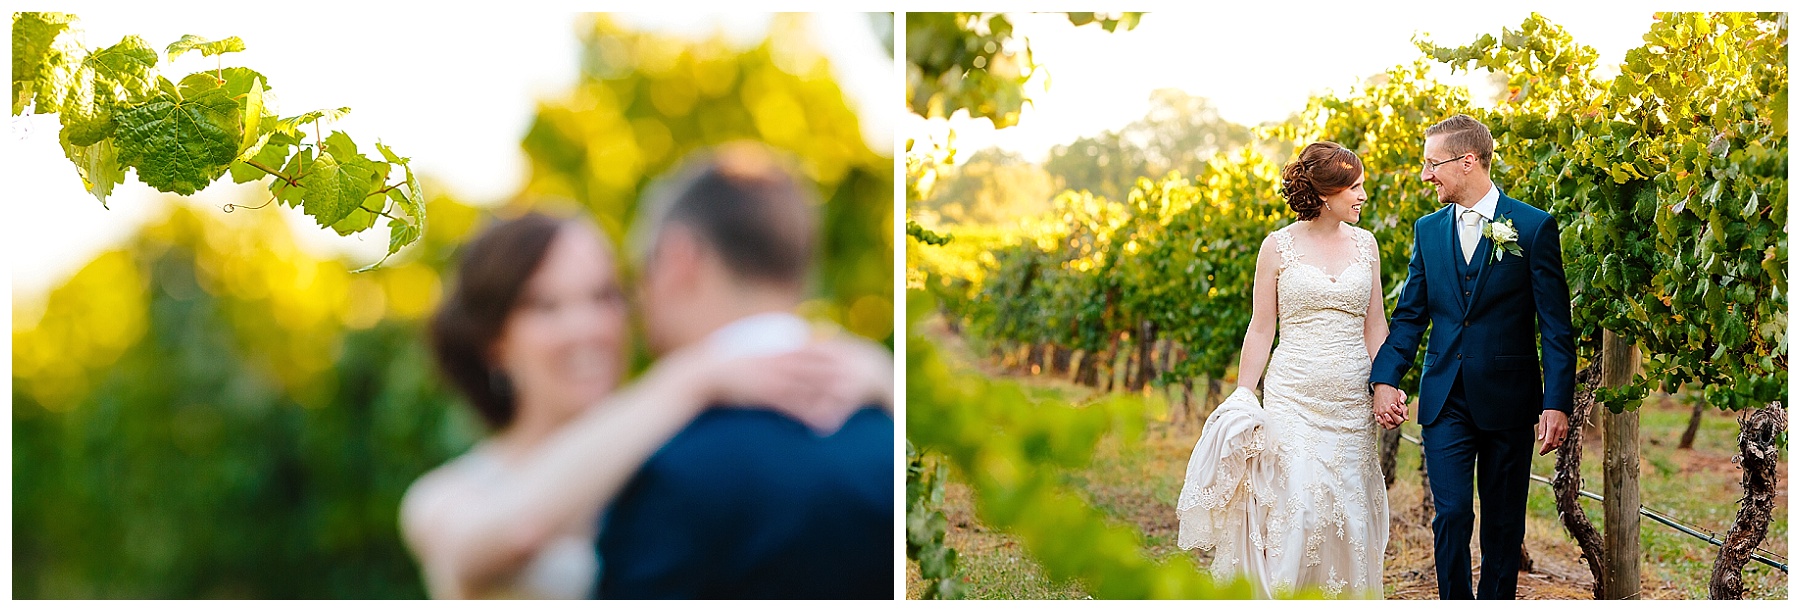 Perth winery wedding 